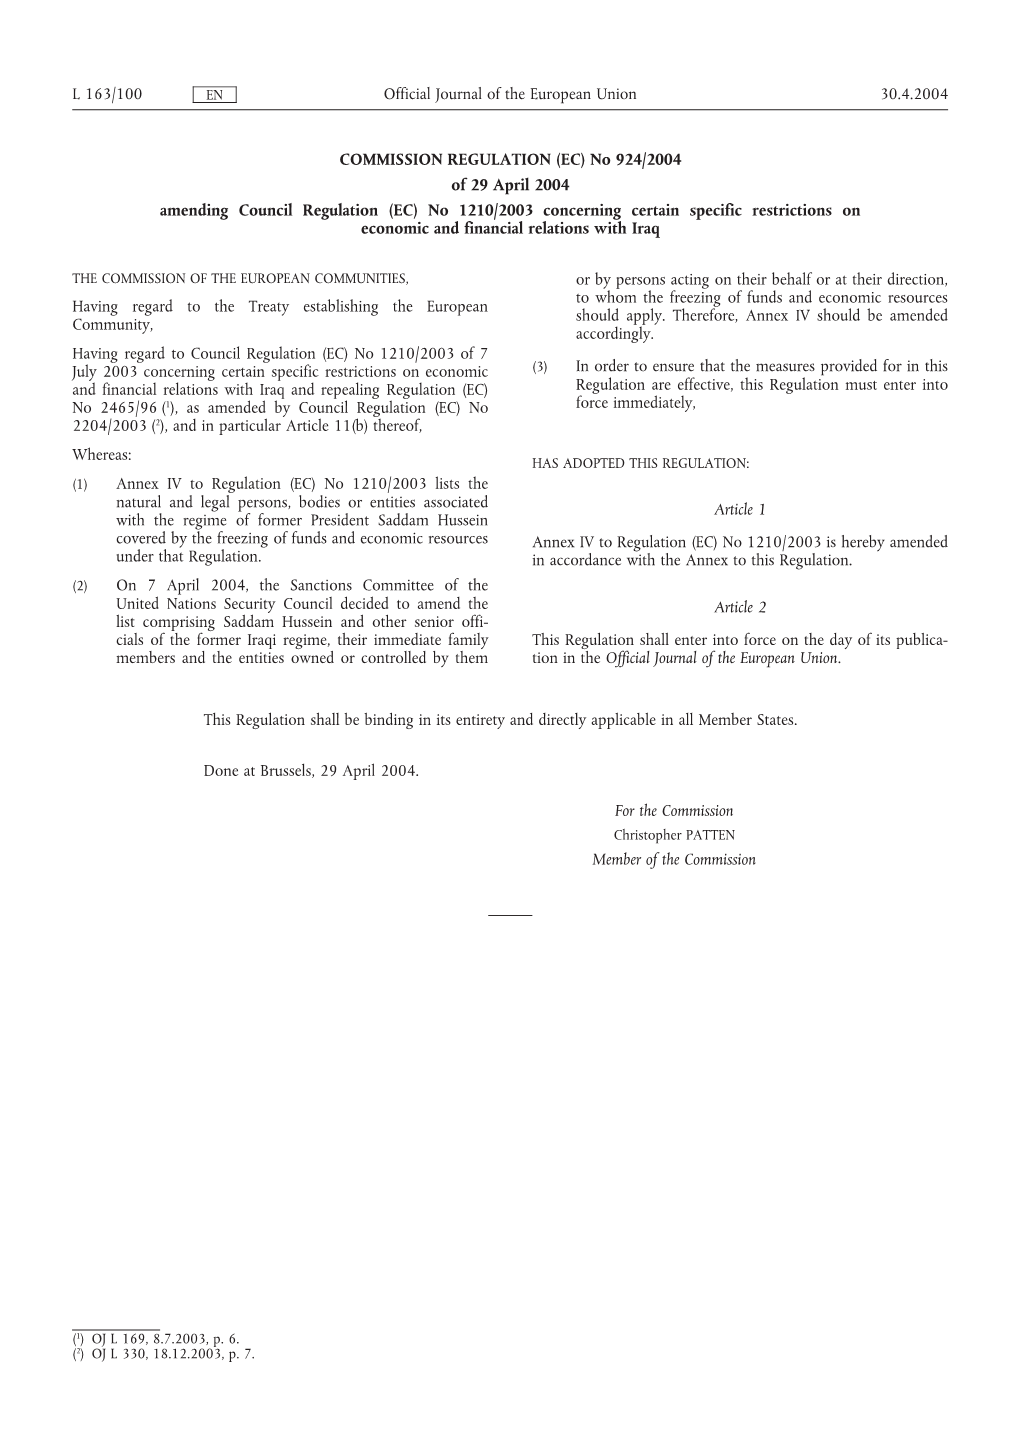 Commission Regulation (EC) No 924/2004